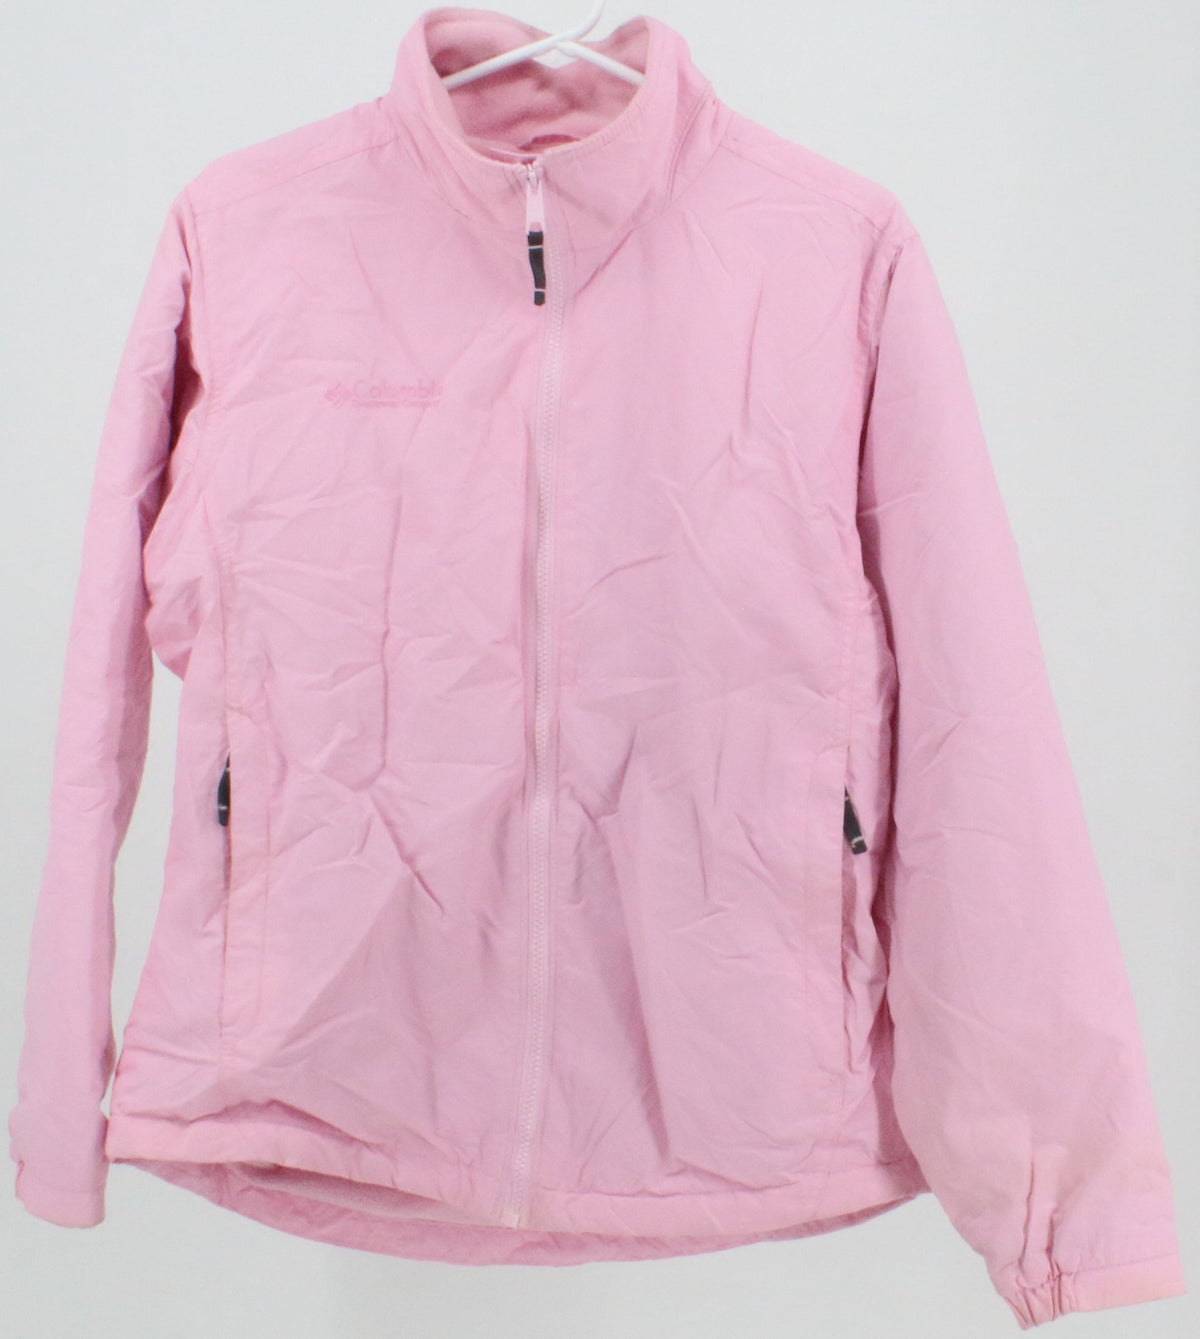 Columbia Women's Pink Fleece Lined Jacket